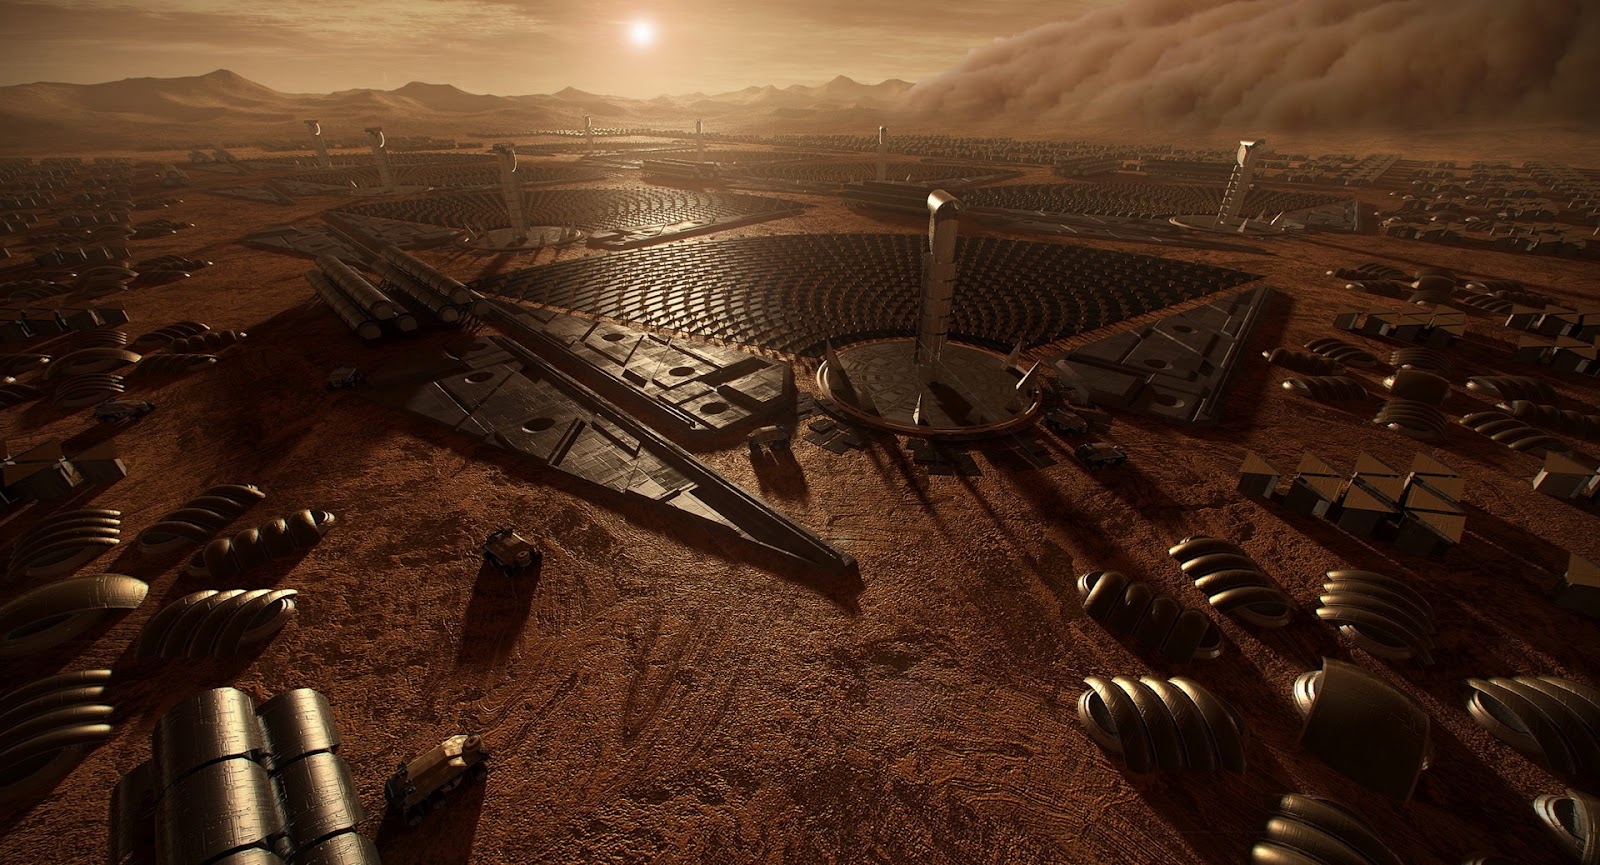 Weyland_Mars_Facility_Dust_Storm_Steve_Burg